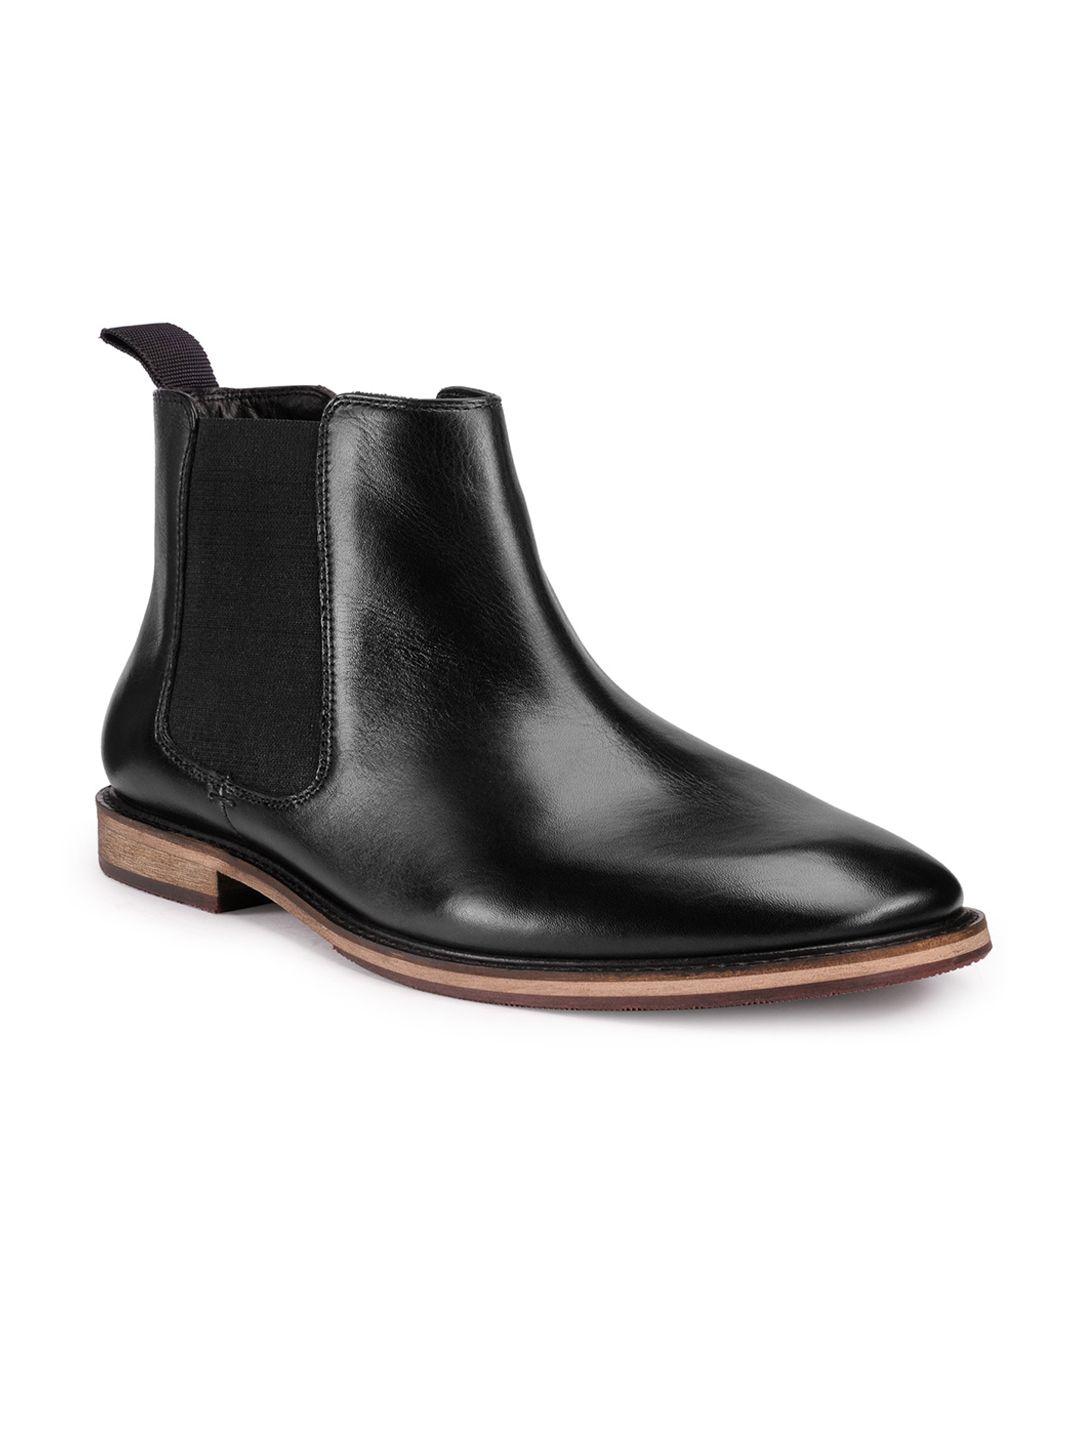 teakwood leathers men mid top block heel leather chelsea boots